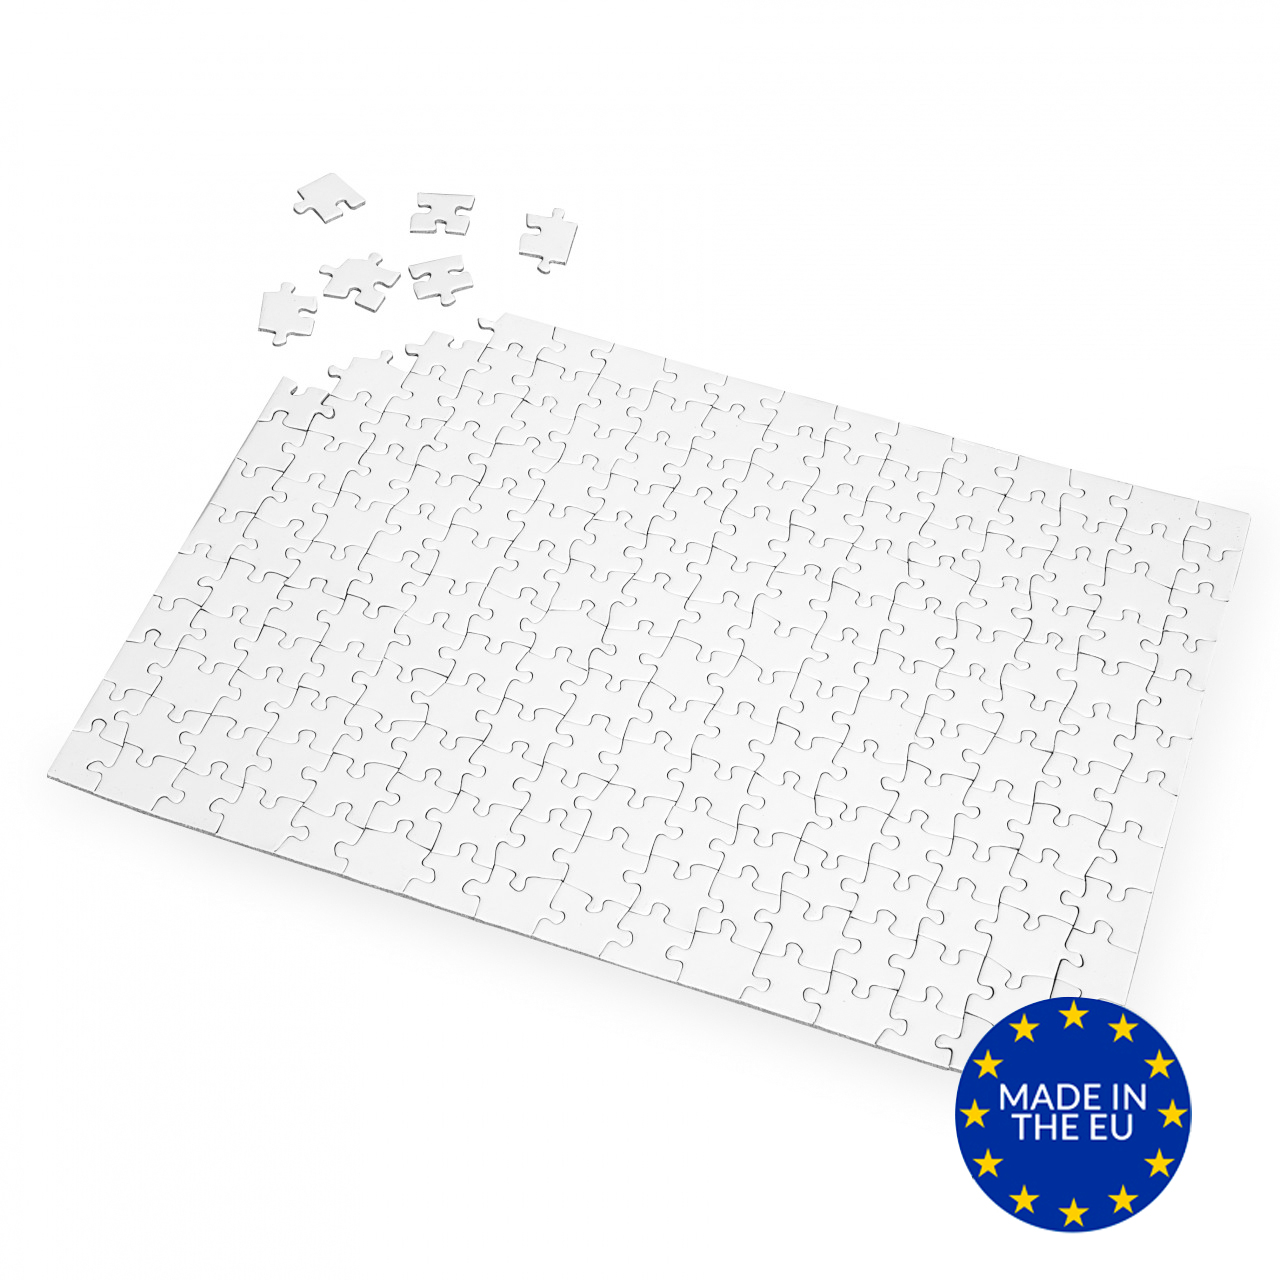 WHITE Plain Sublimation Cardboard Puzzle, Size: A4 at Rs 70/piece